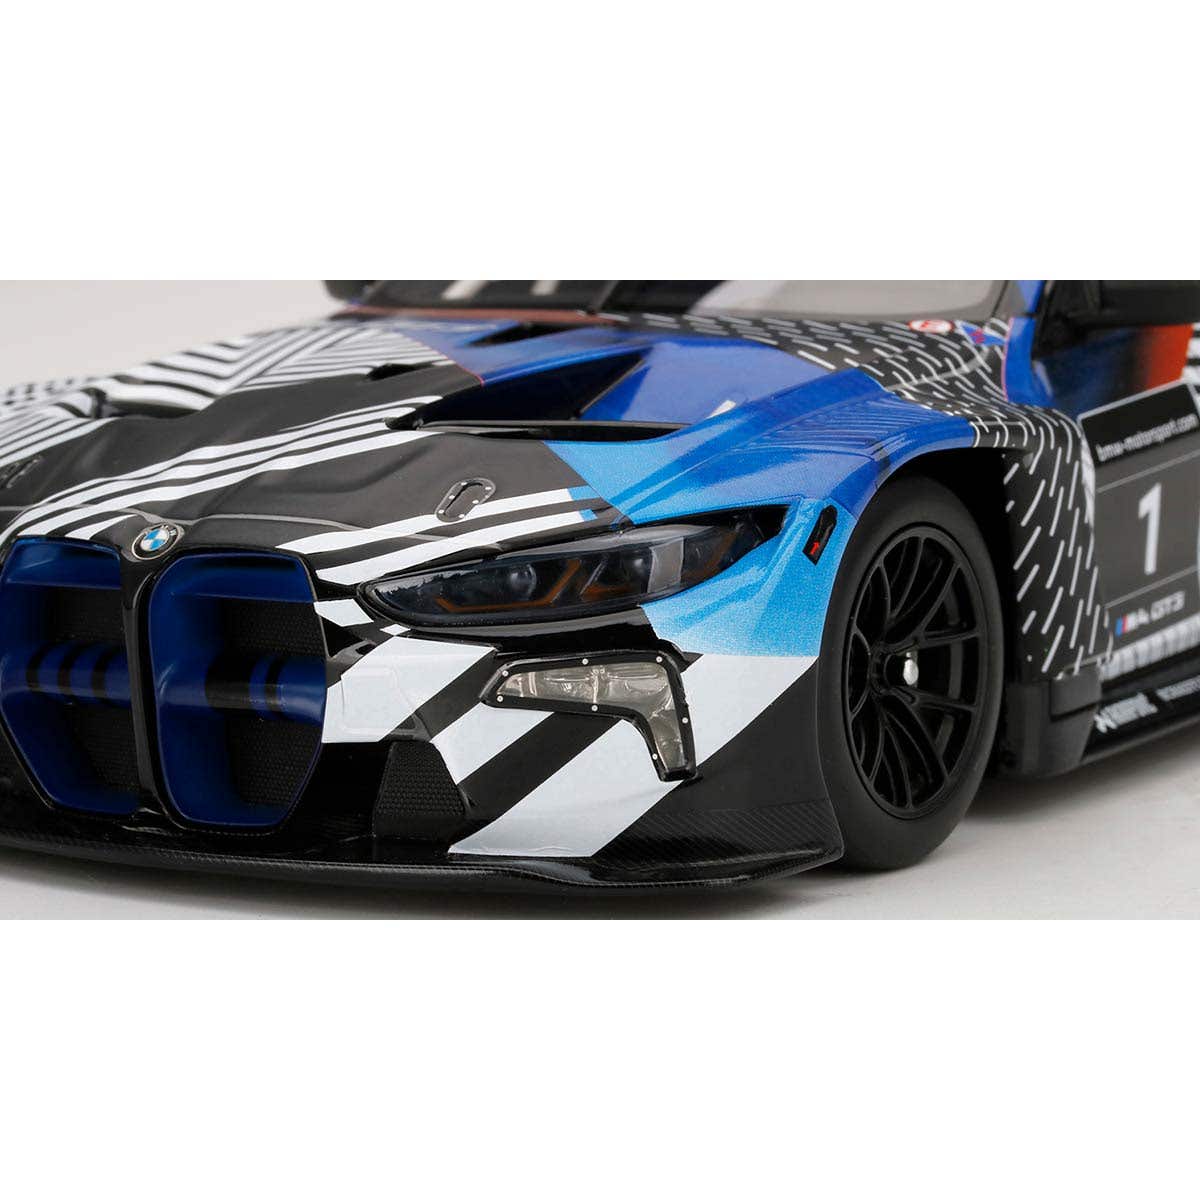 BMW M4 GT3 Test Car  ver 1 - 1:18 Scale Resin Model Car